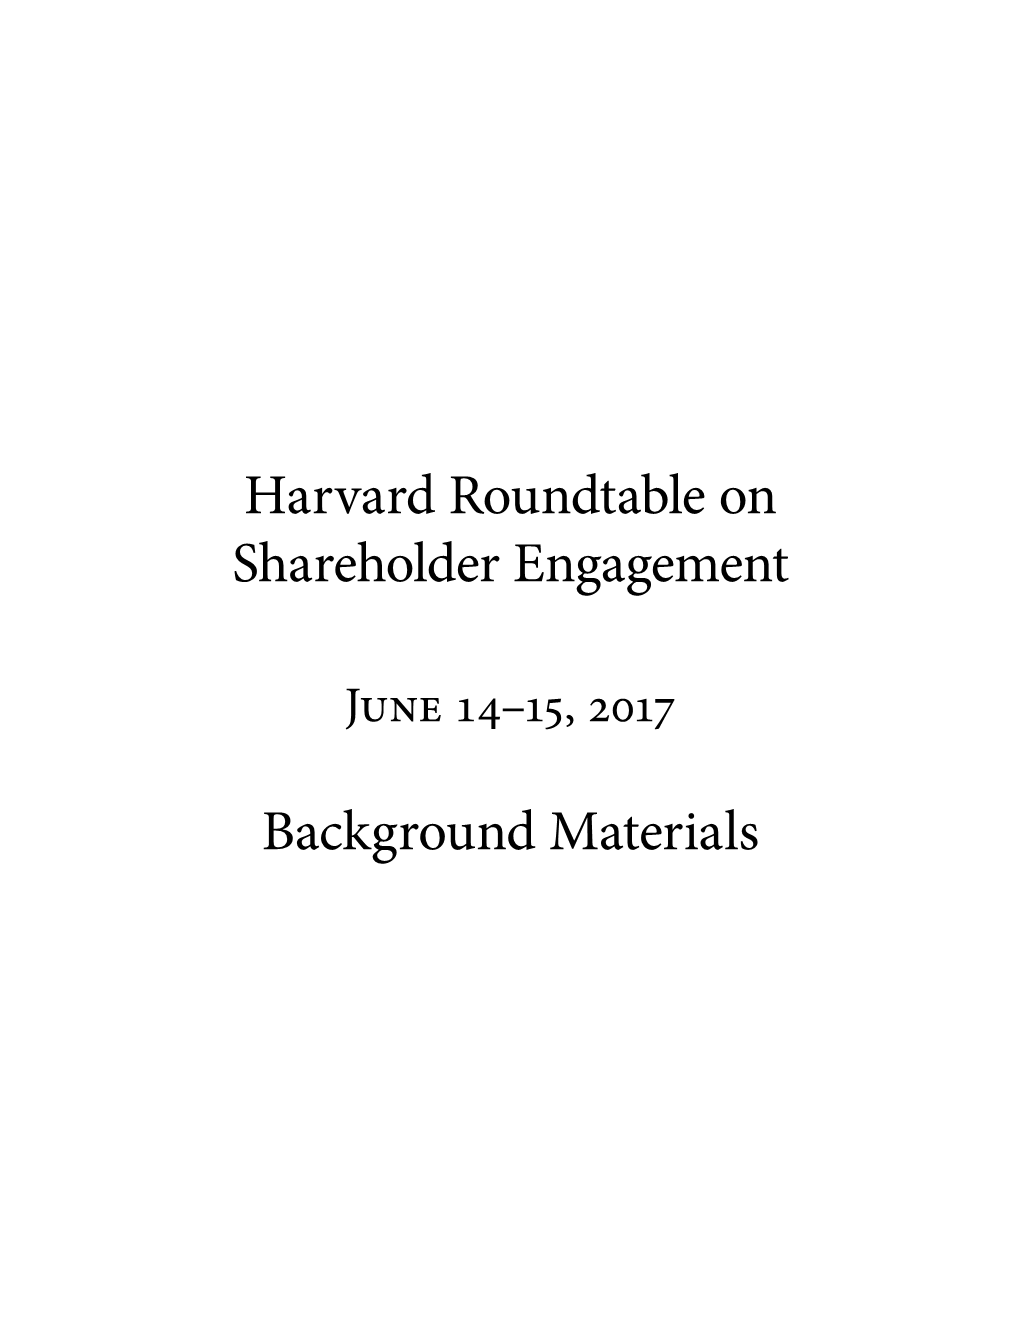 Harvard Roundtable on Shareholder Engagement Background Materials